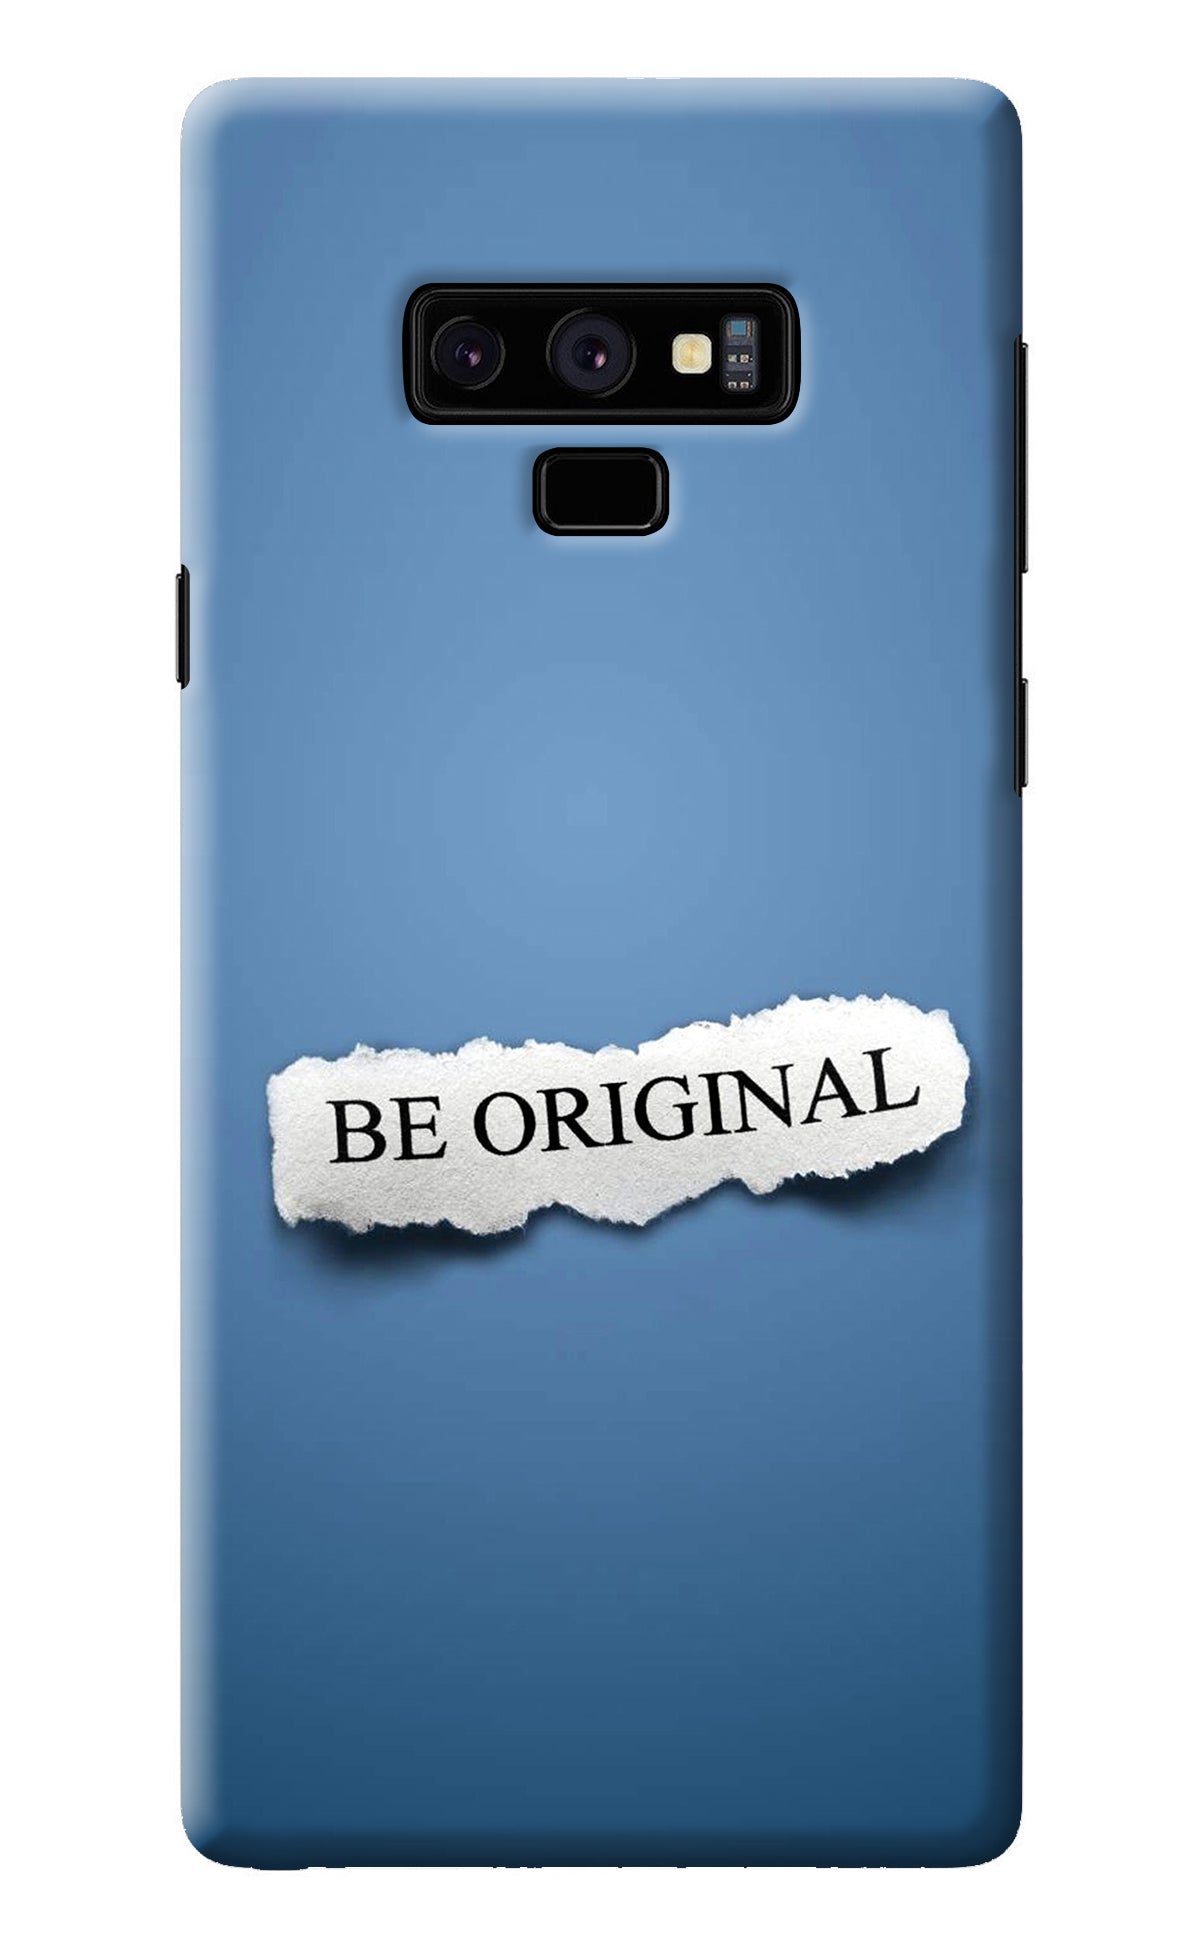 Be Original Samsung Note 9 Back Cover